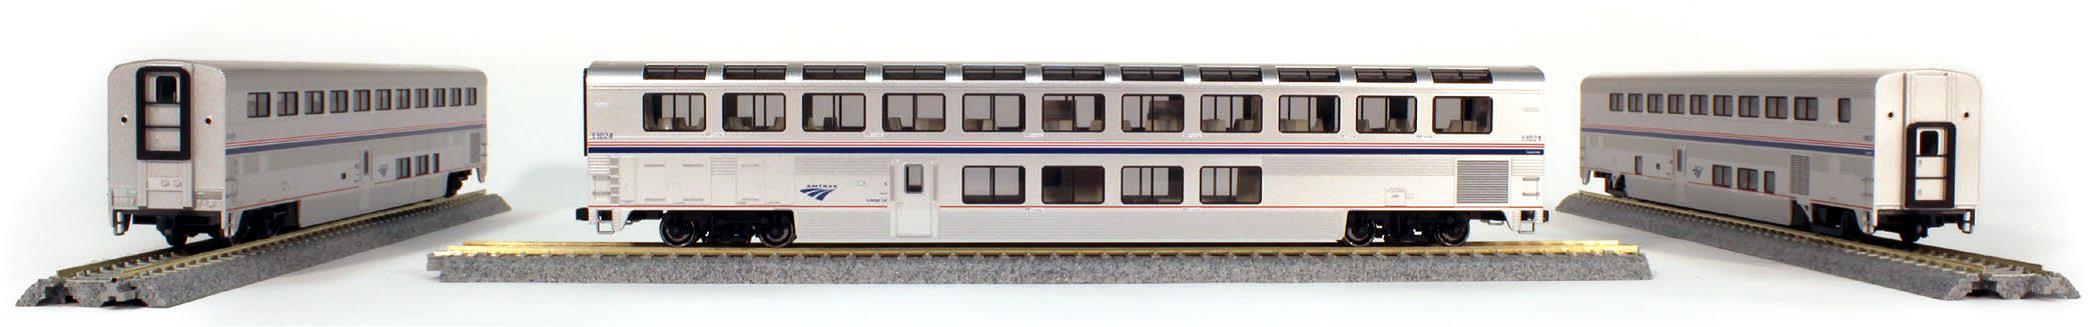 Amtrak Superliner I & II Coaches